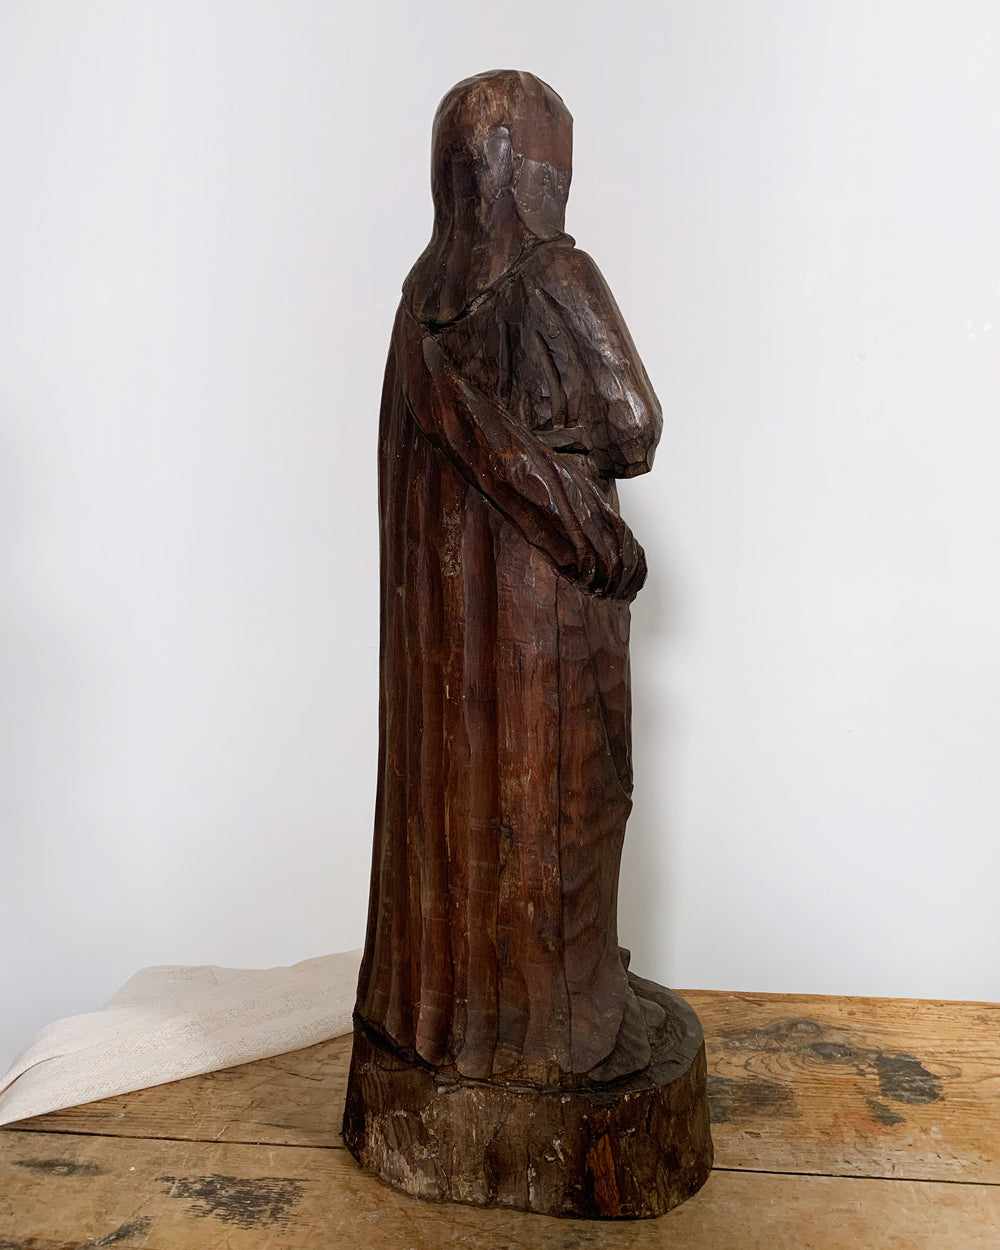 Antique Religious Wood Carving - Saint